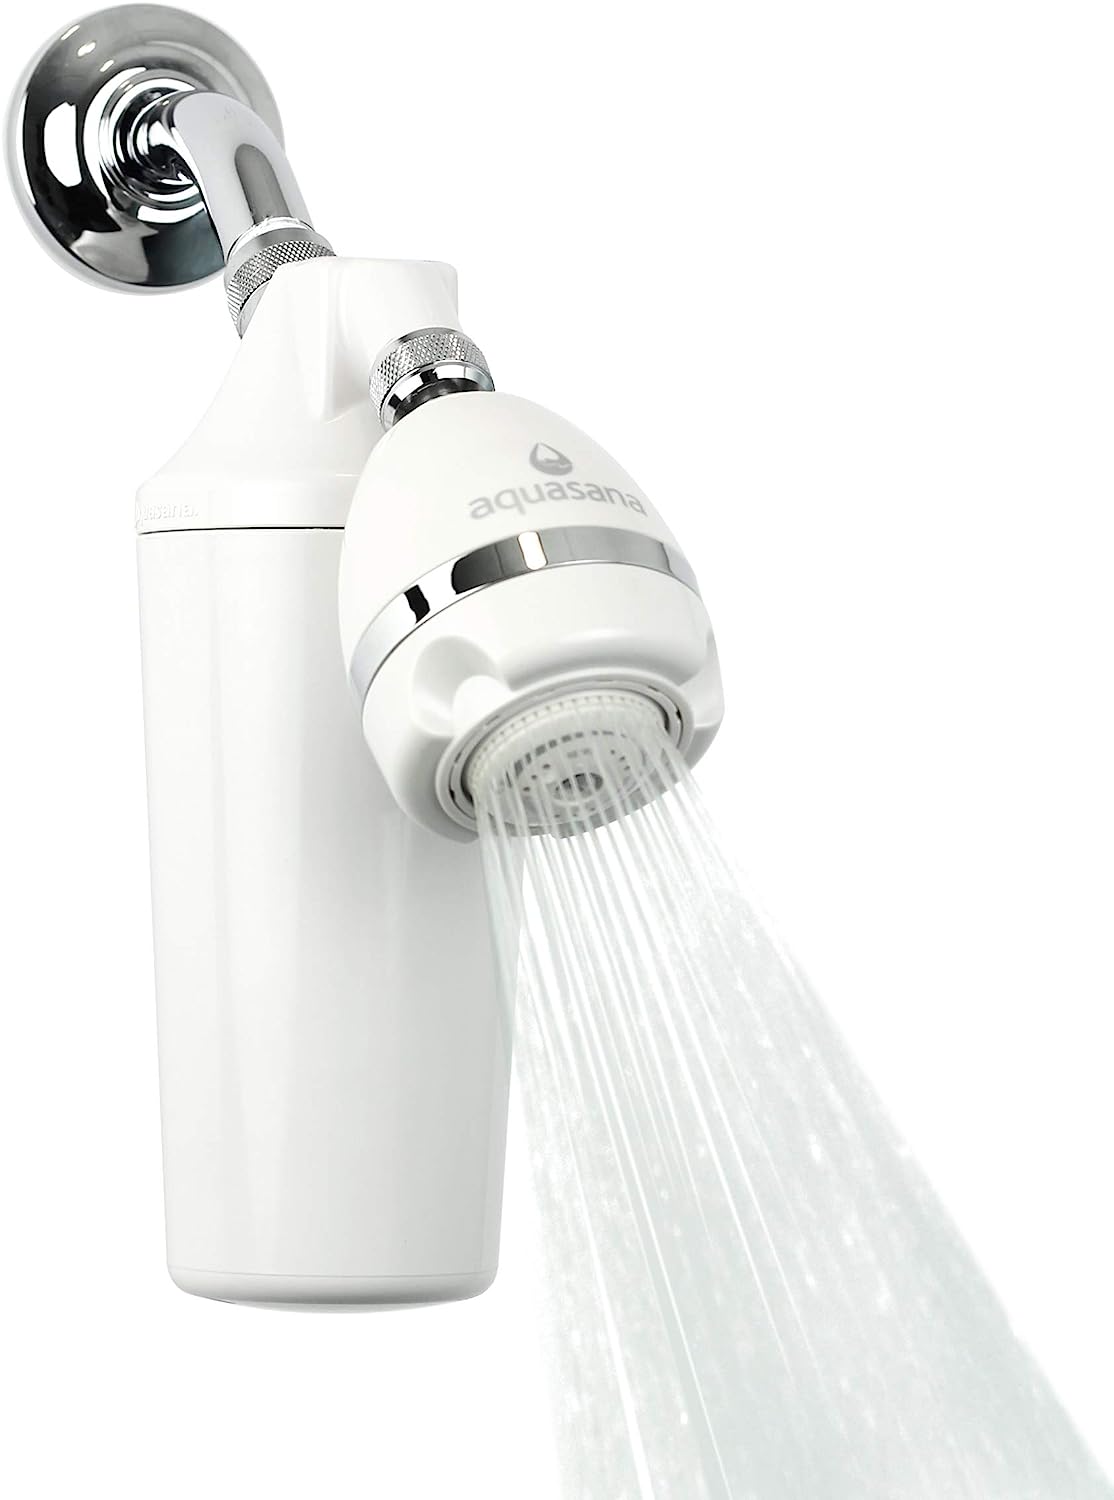 Filtro para ducha de Aquasana, Blanco, AQ-4100 - VIRTUAL MUEBLES